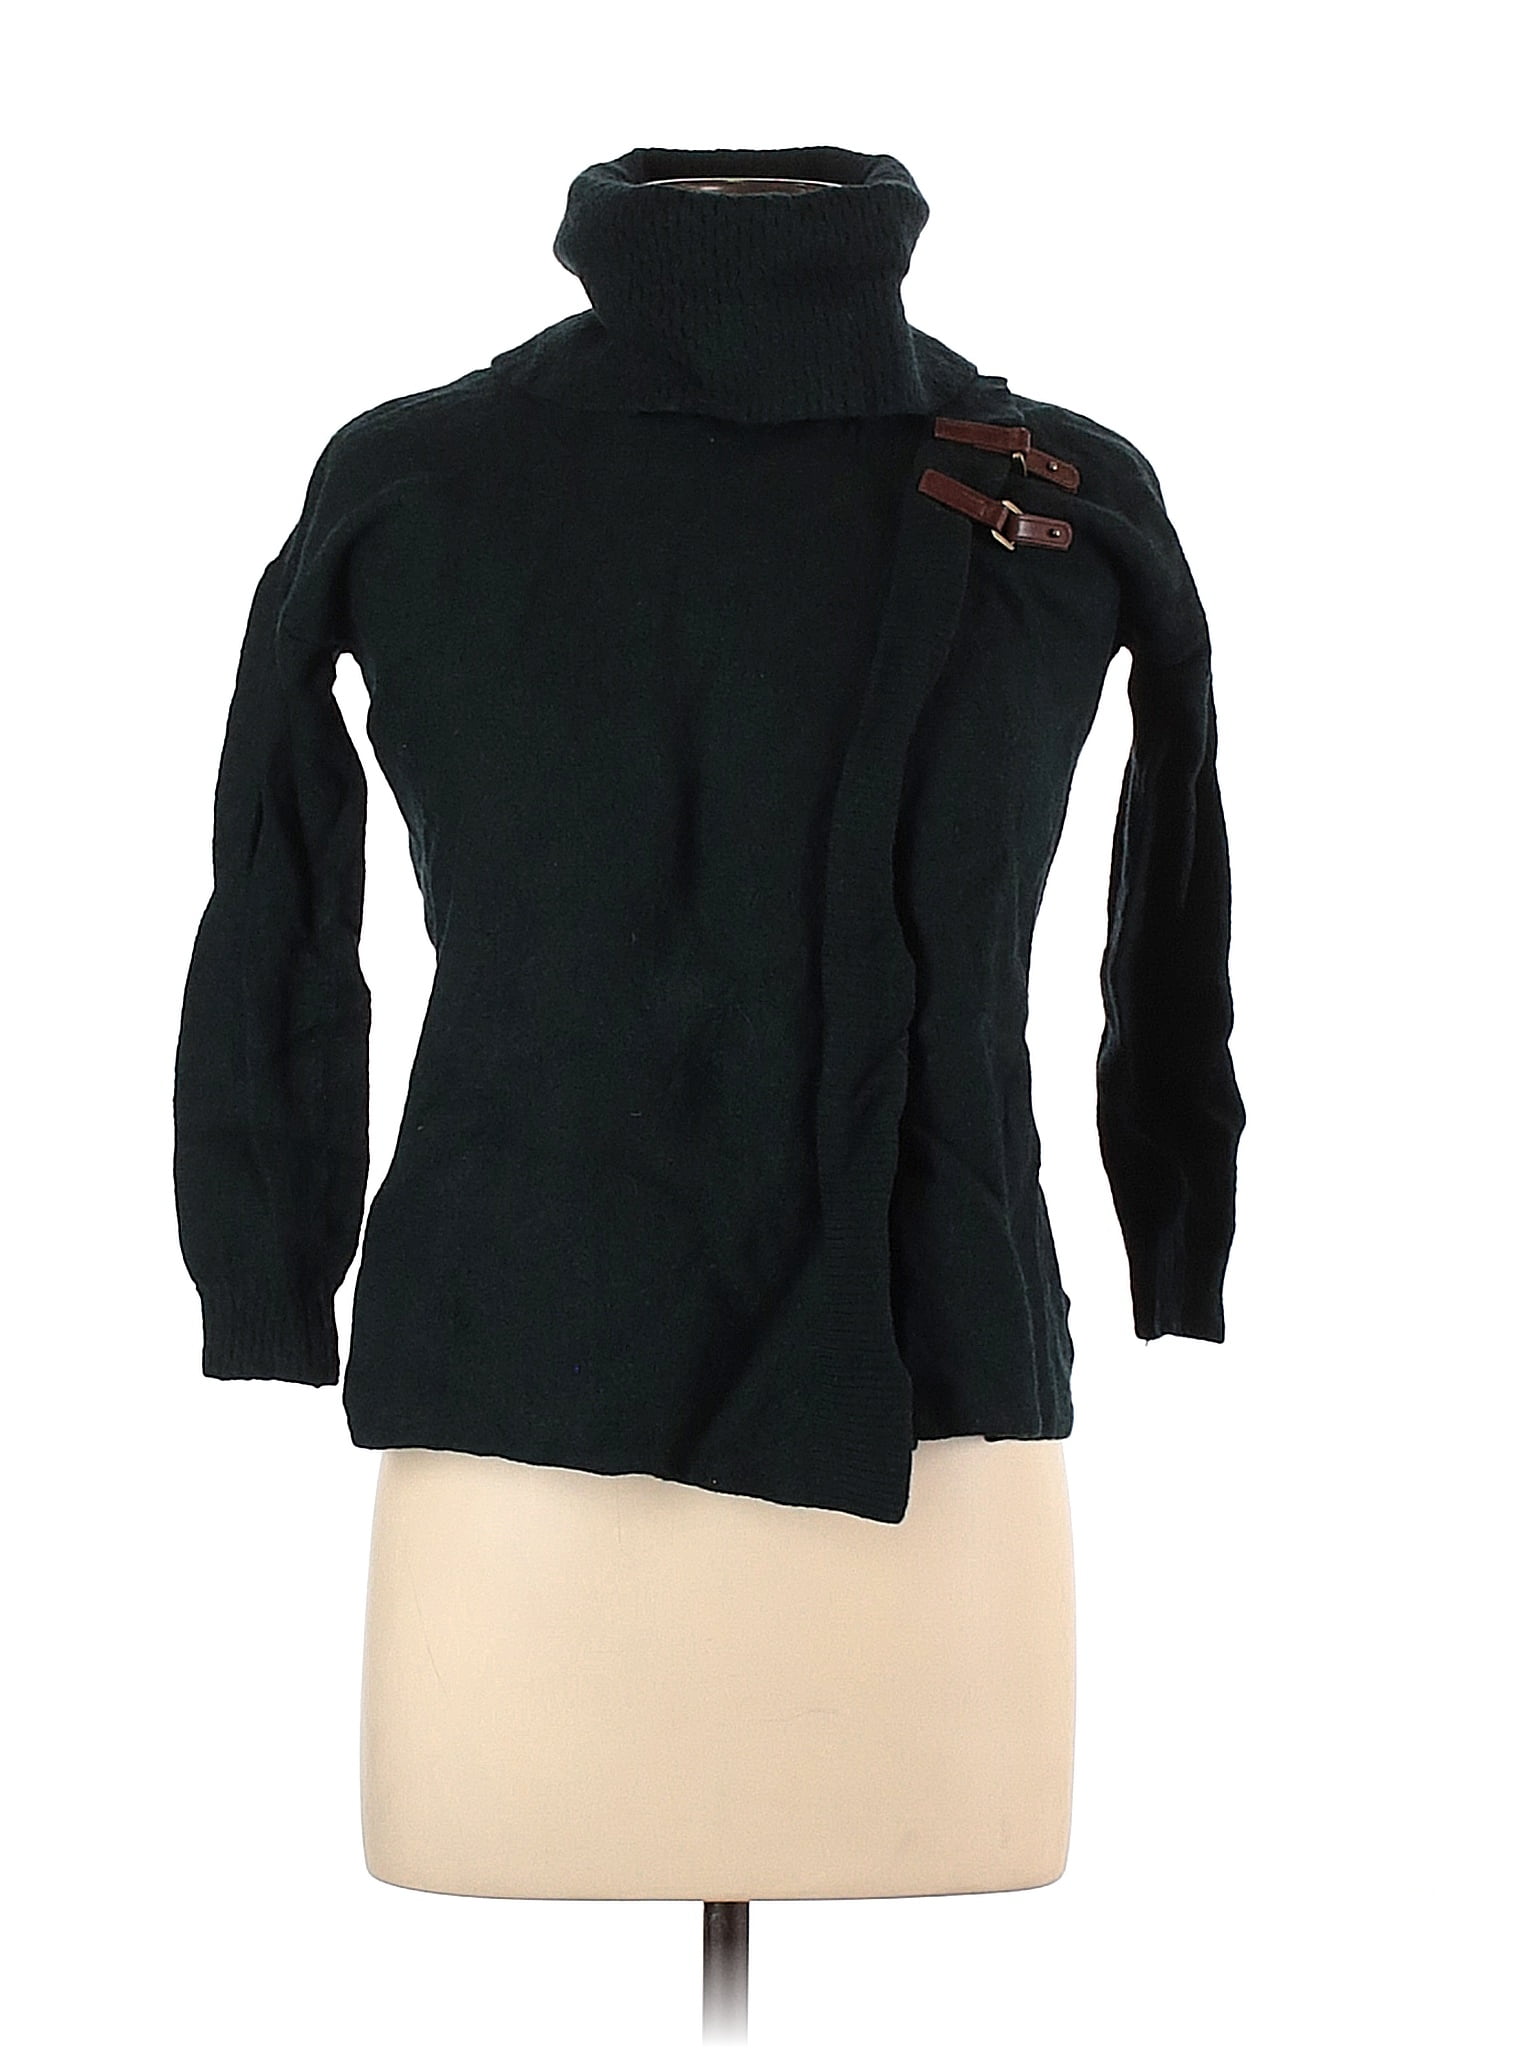 Ellen Tracy 100% Merino Black Teal Turtleneck Sweater Size L - 77% off ...